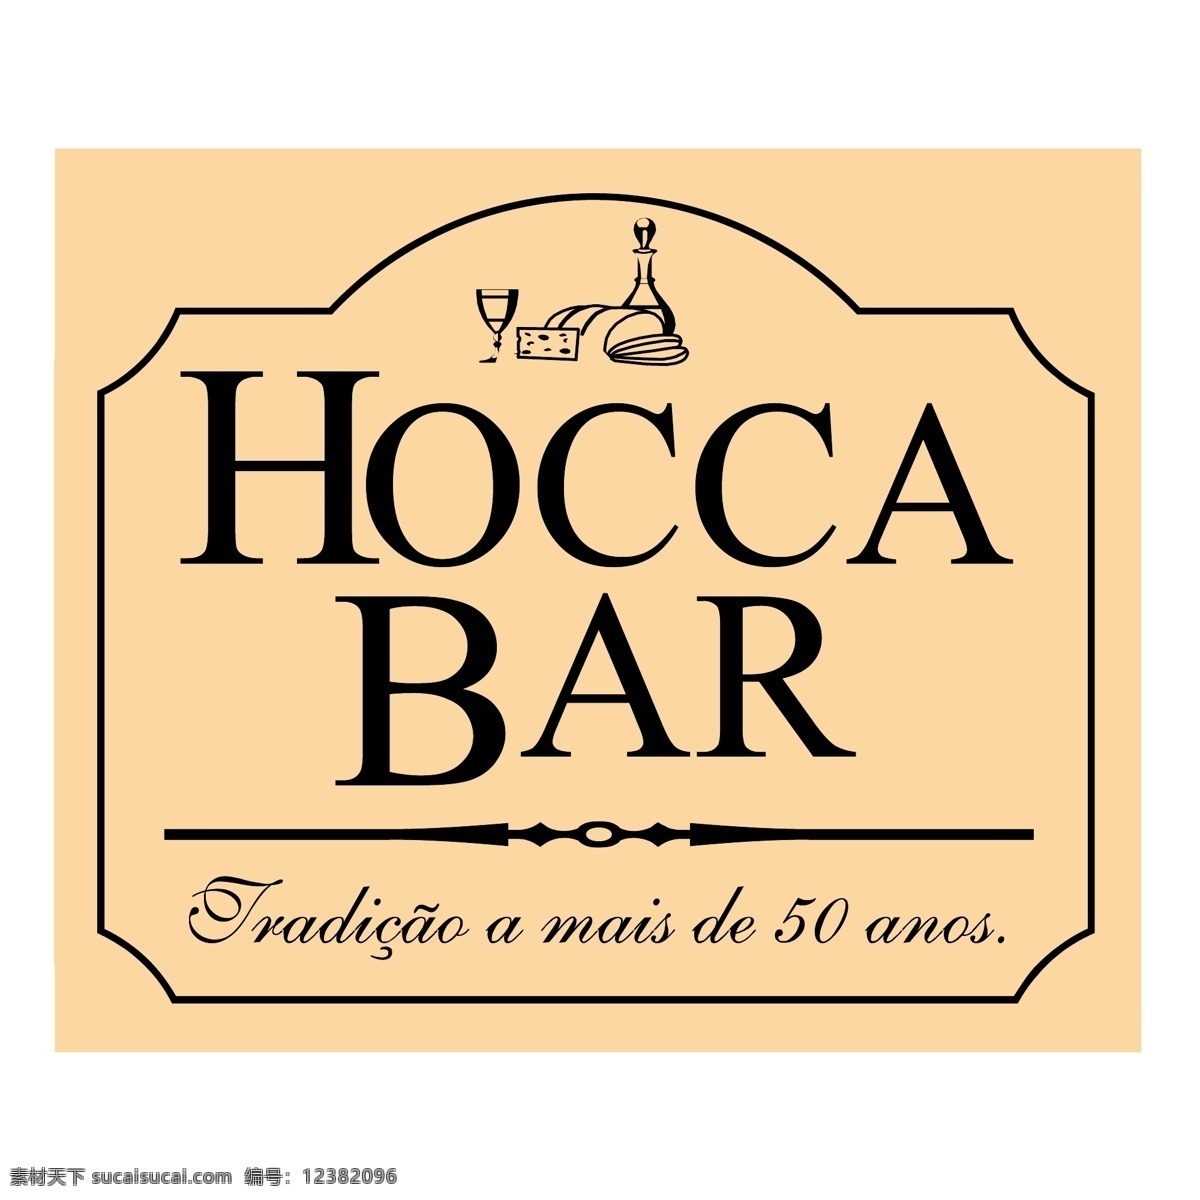 hocca 酒吧 标识 公司 免费 品牌 品牌标识 商标 矢量标志下载 免费矢量标识 矢量 psd源文件 logo设计